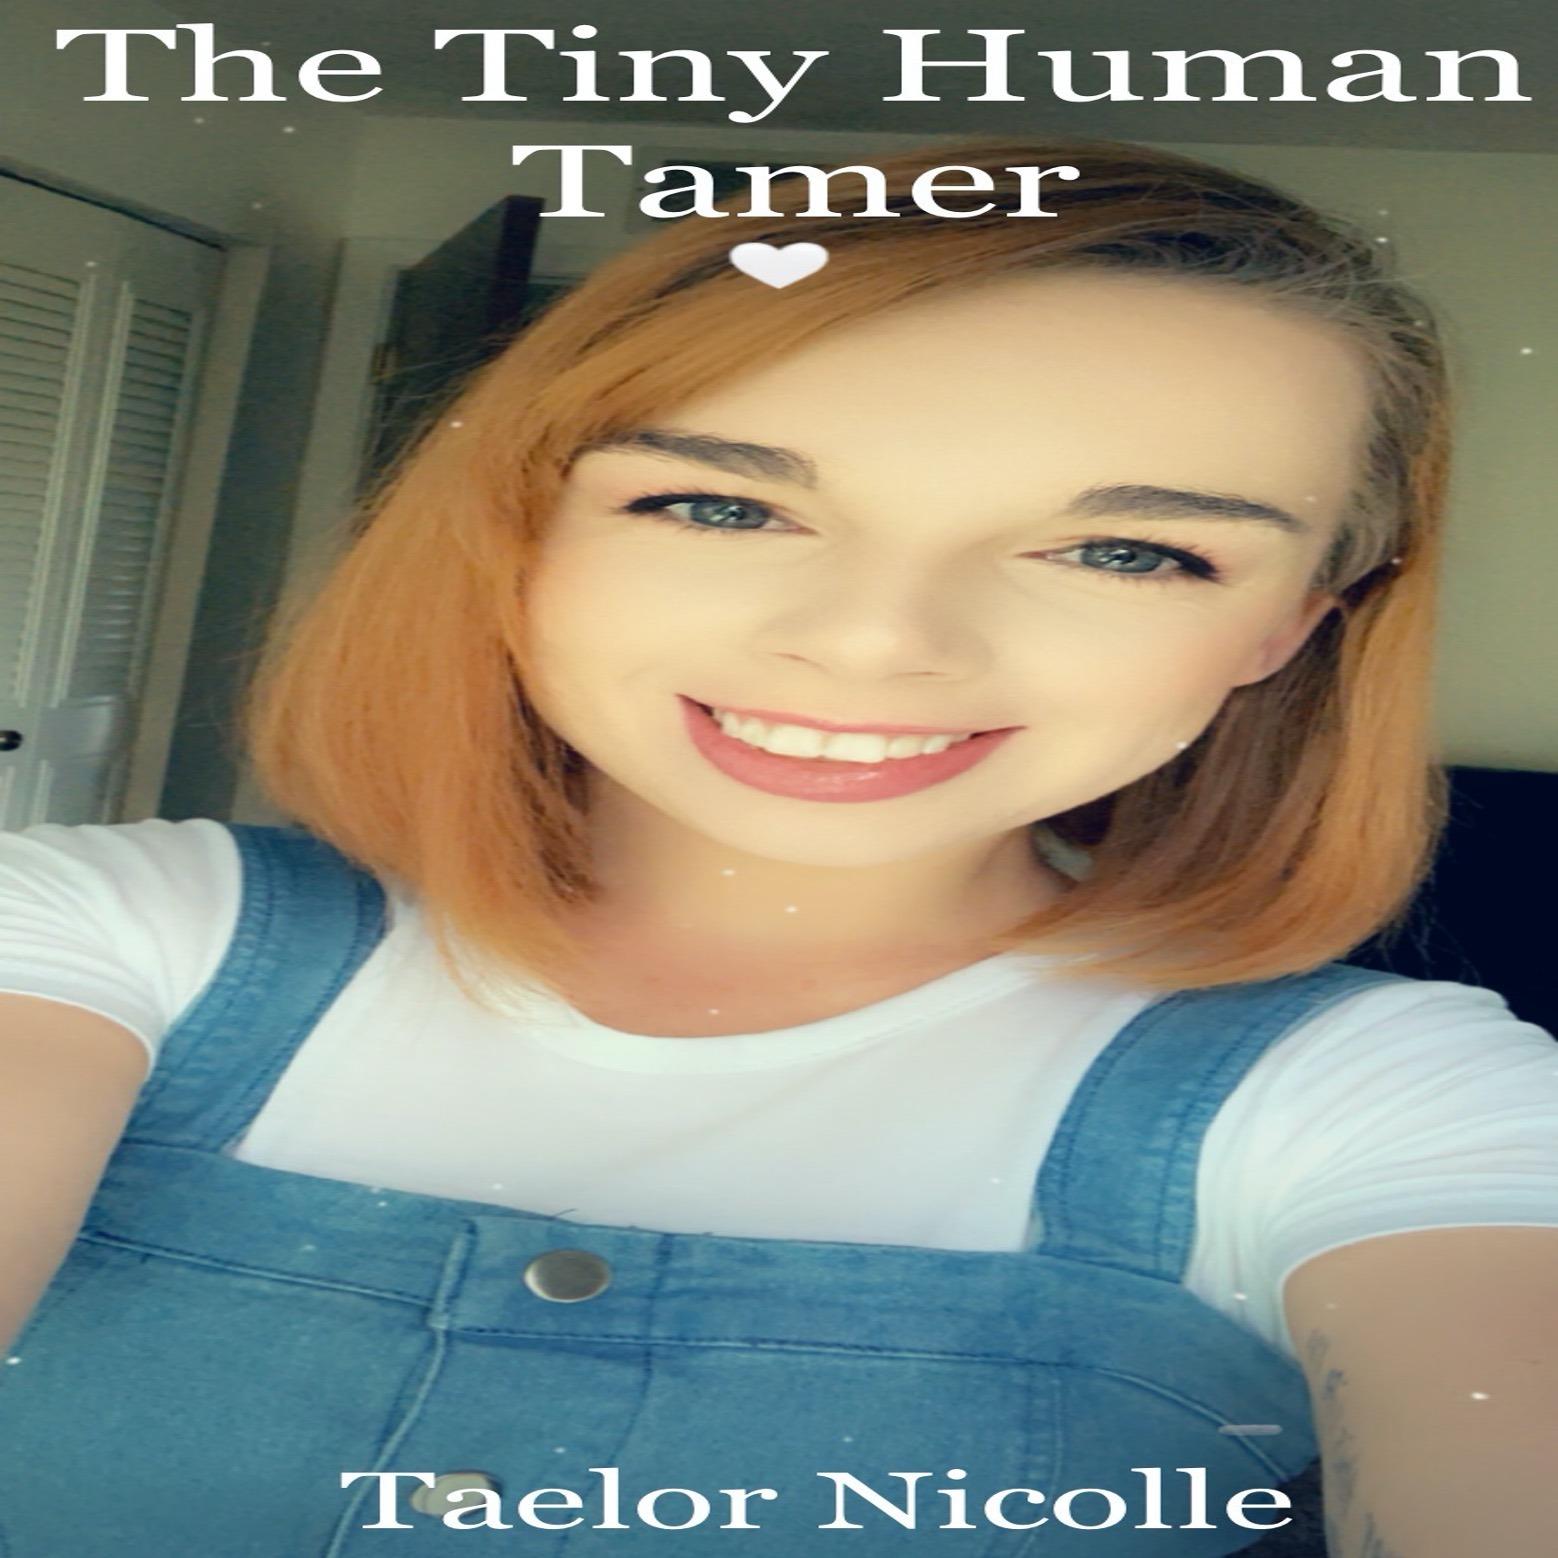 The Tiny Human Tamer